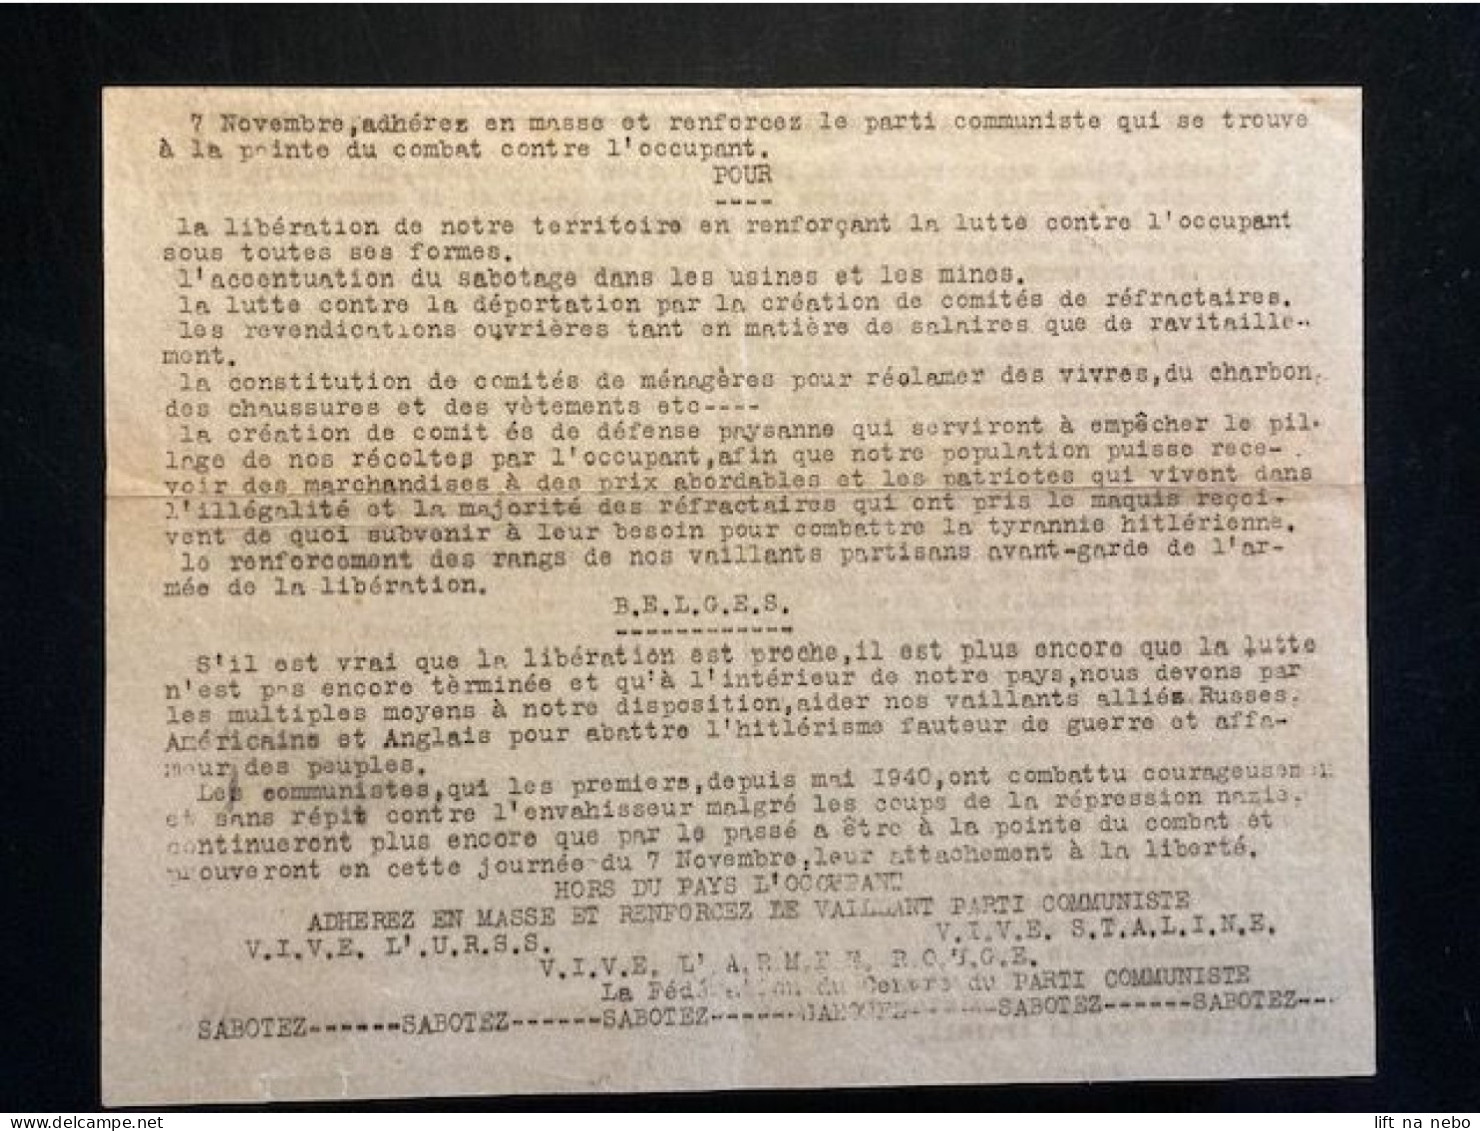 Tract Presse Clandestine Résistance Belge WWII WW2 'Assistons La Vaillante Armée Rouge...' - Documenti